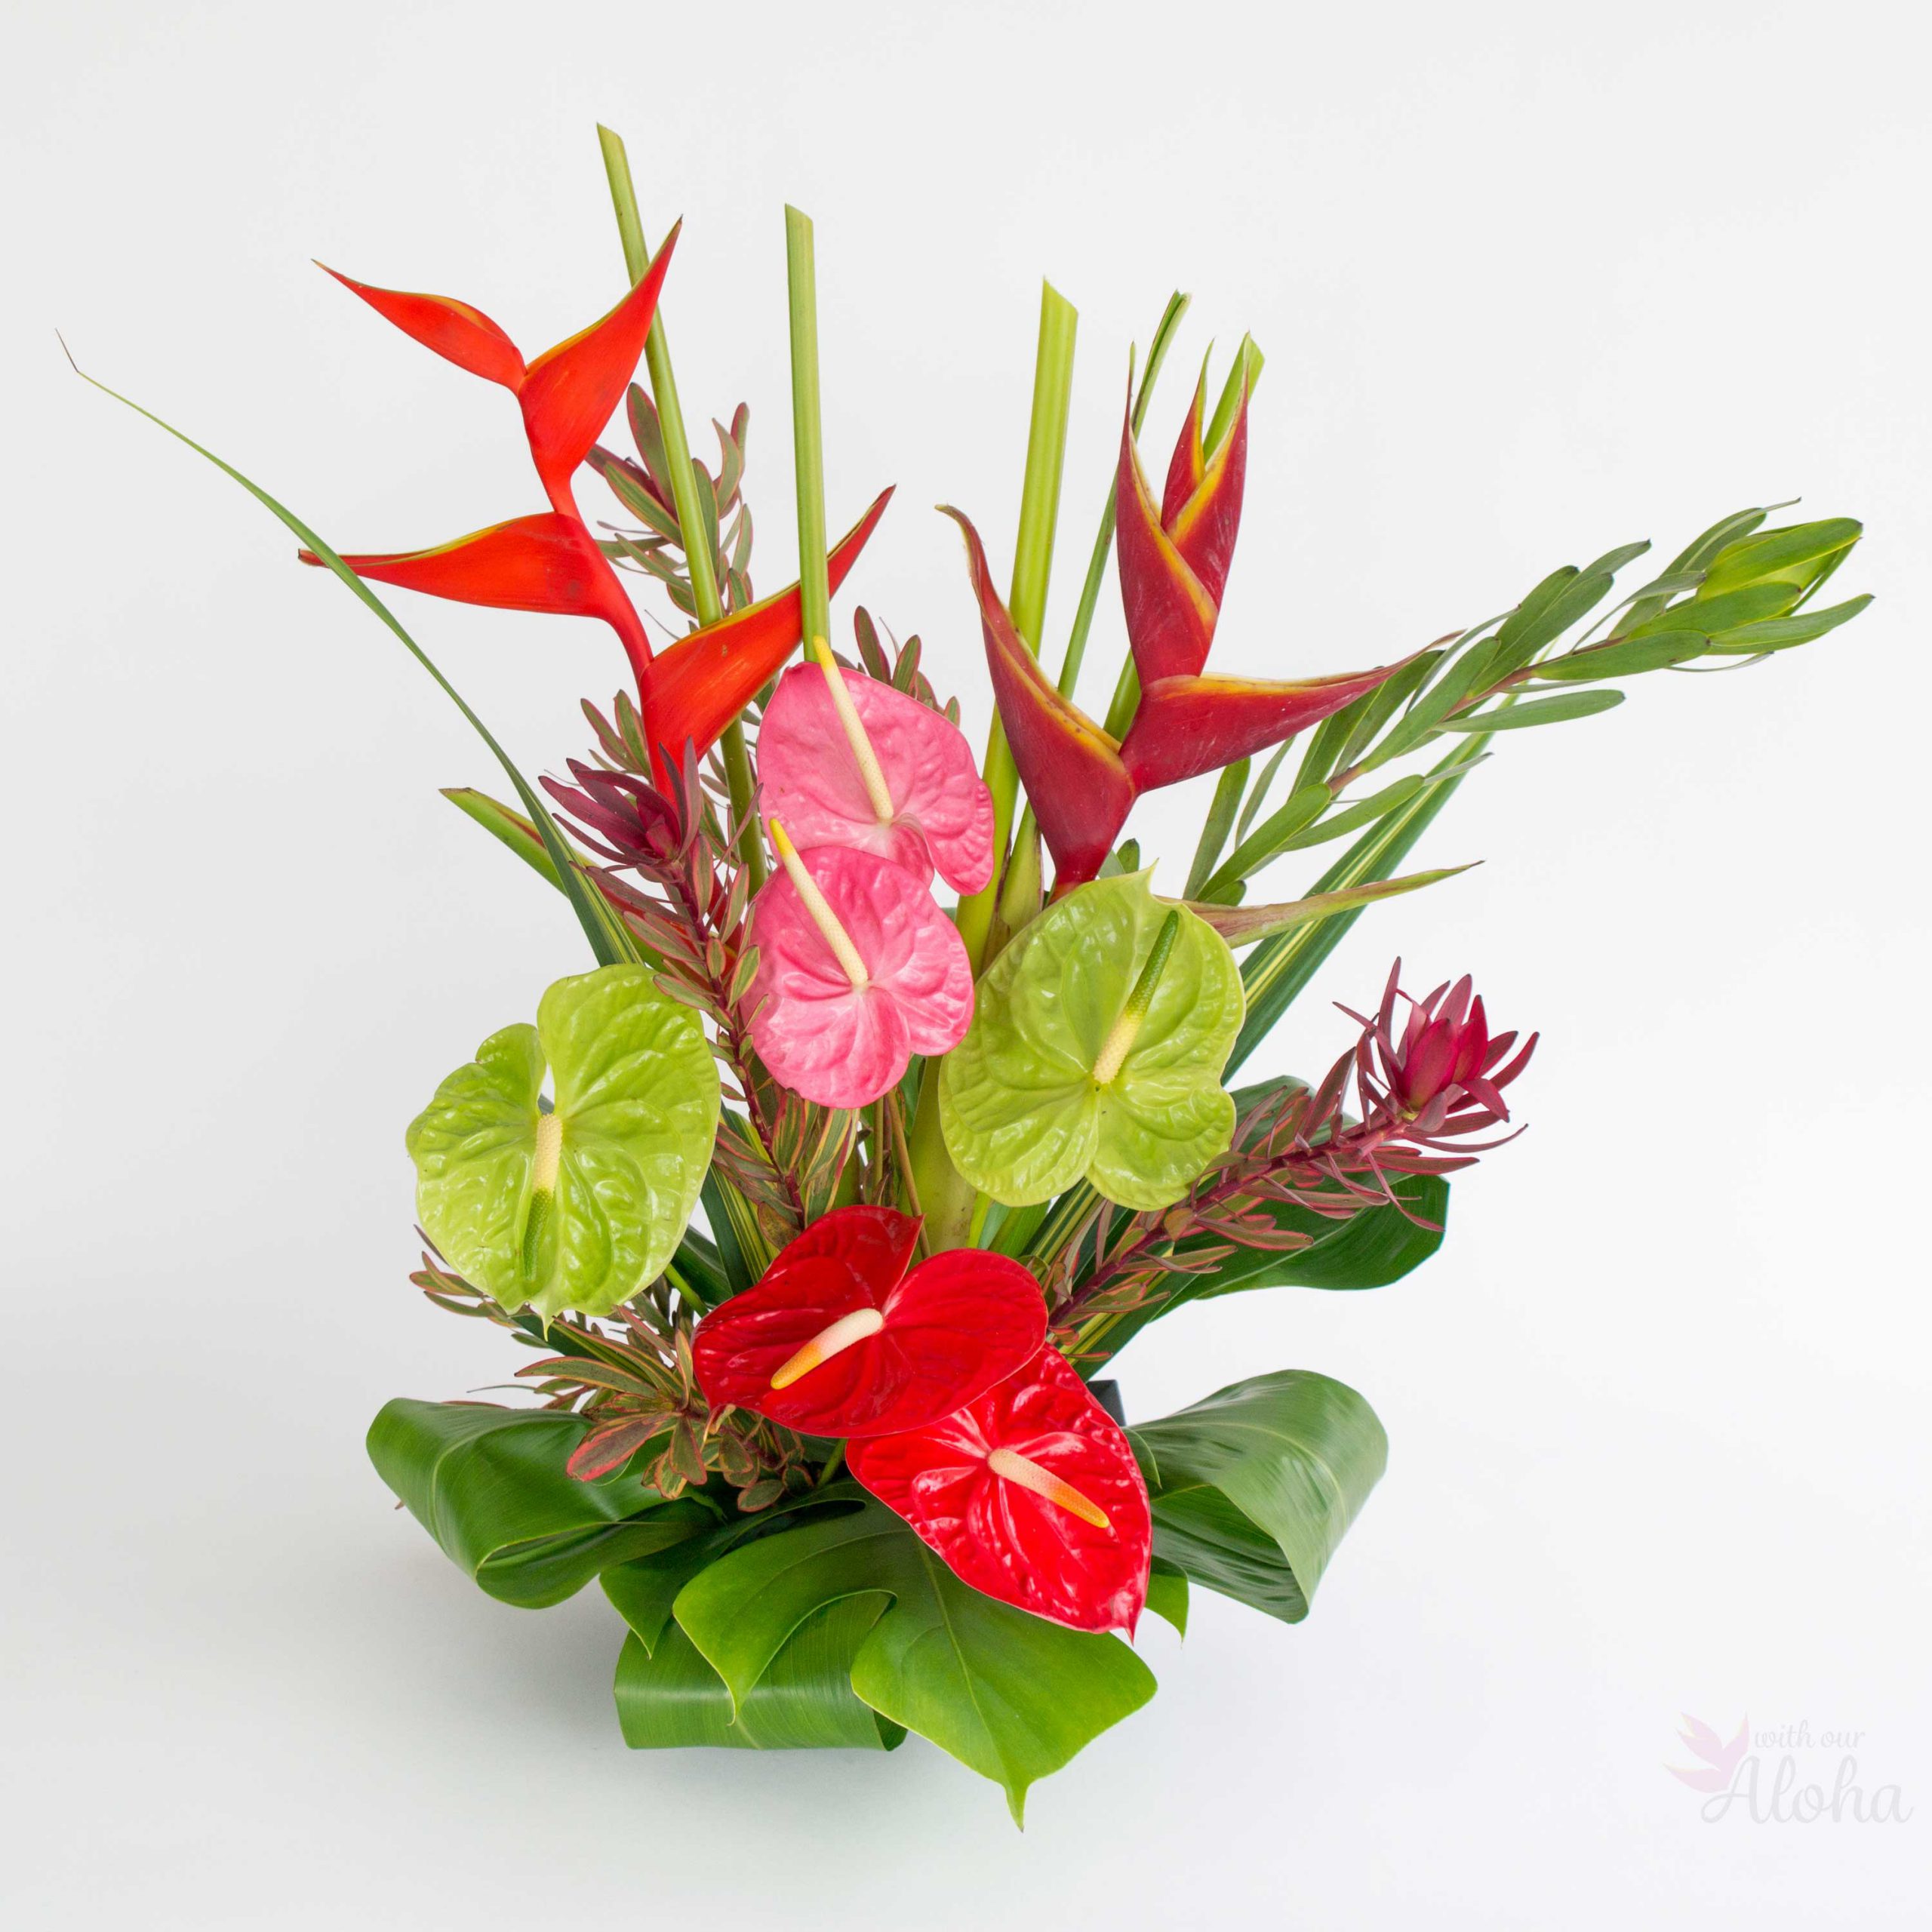 Hawaiian Mothers Day Flowers - With Our Aloha